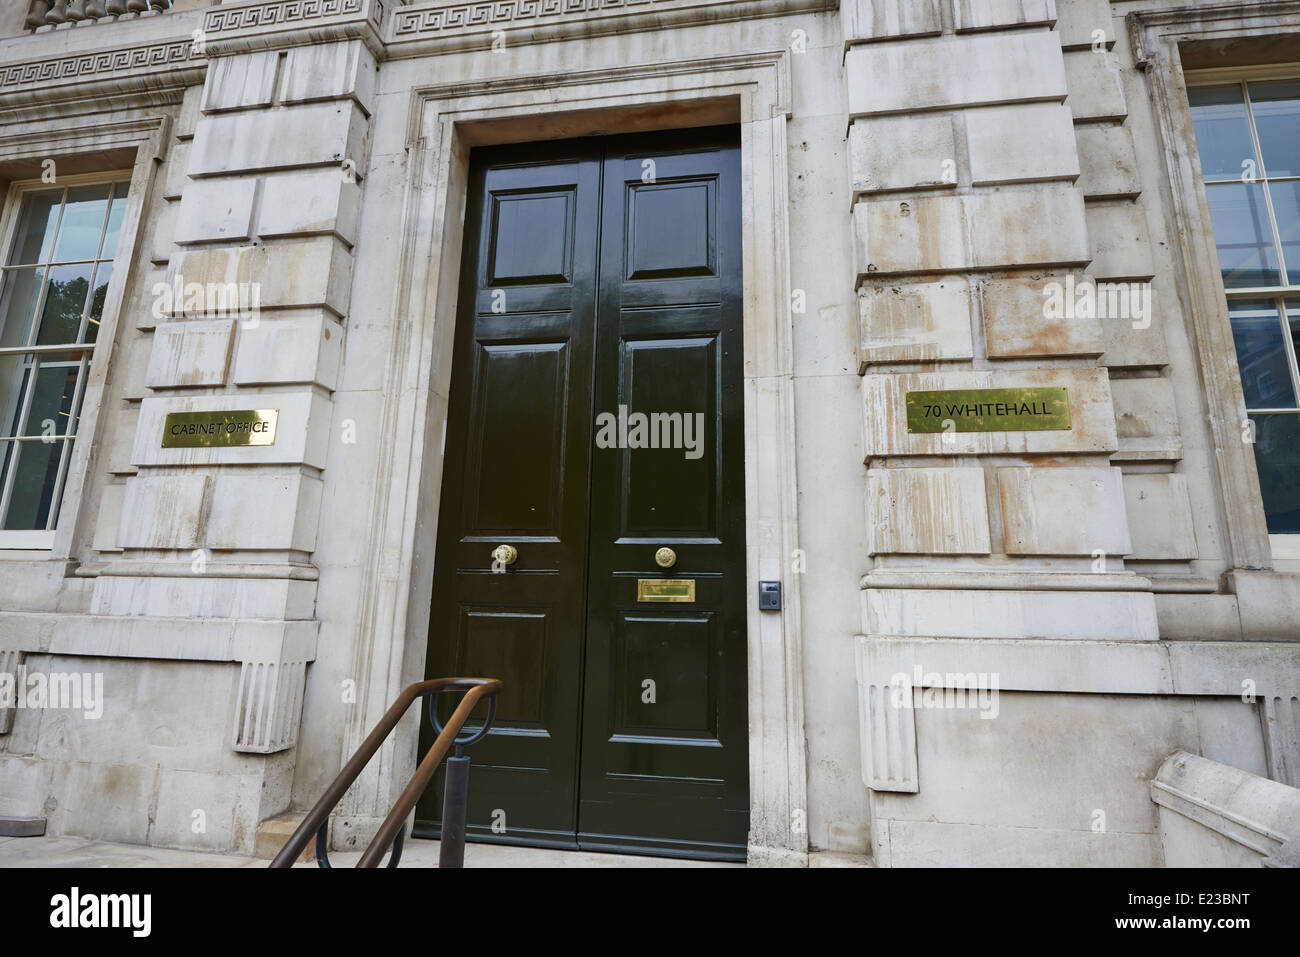 Cabinet Office Whitehall London UK Stockfoto